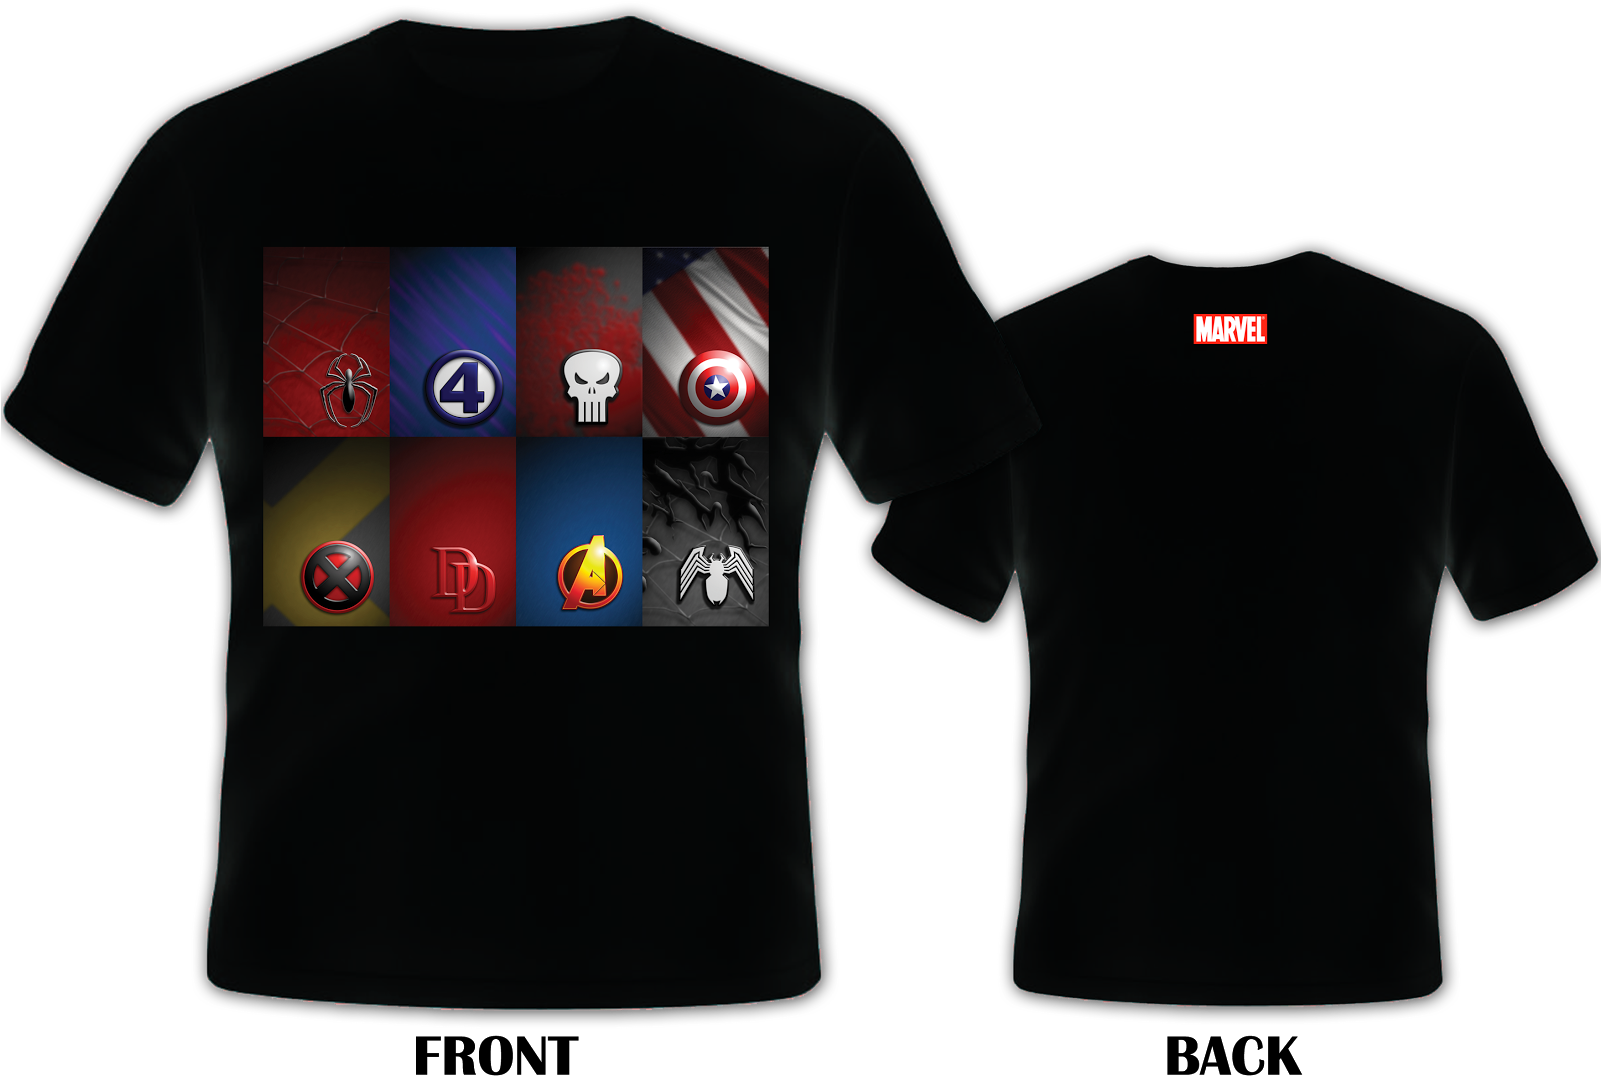 Marvel Superhero Icons Black Tshirt Design PNG image